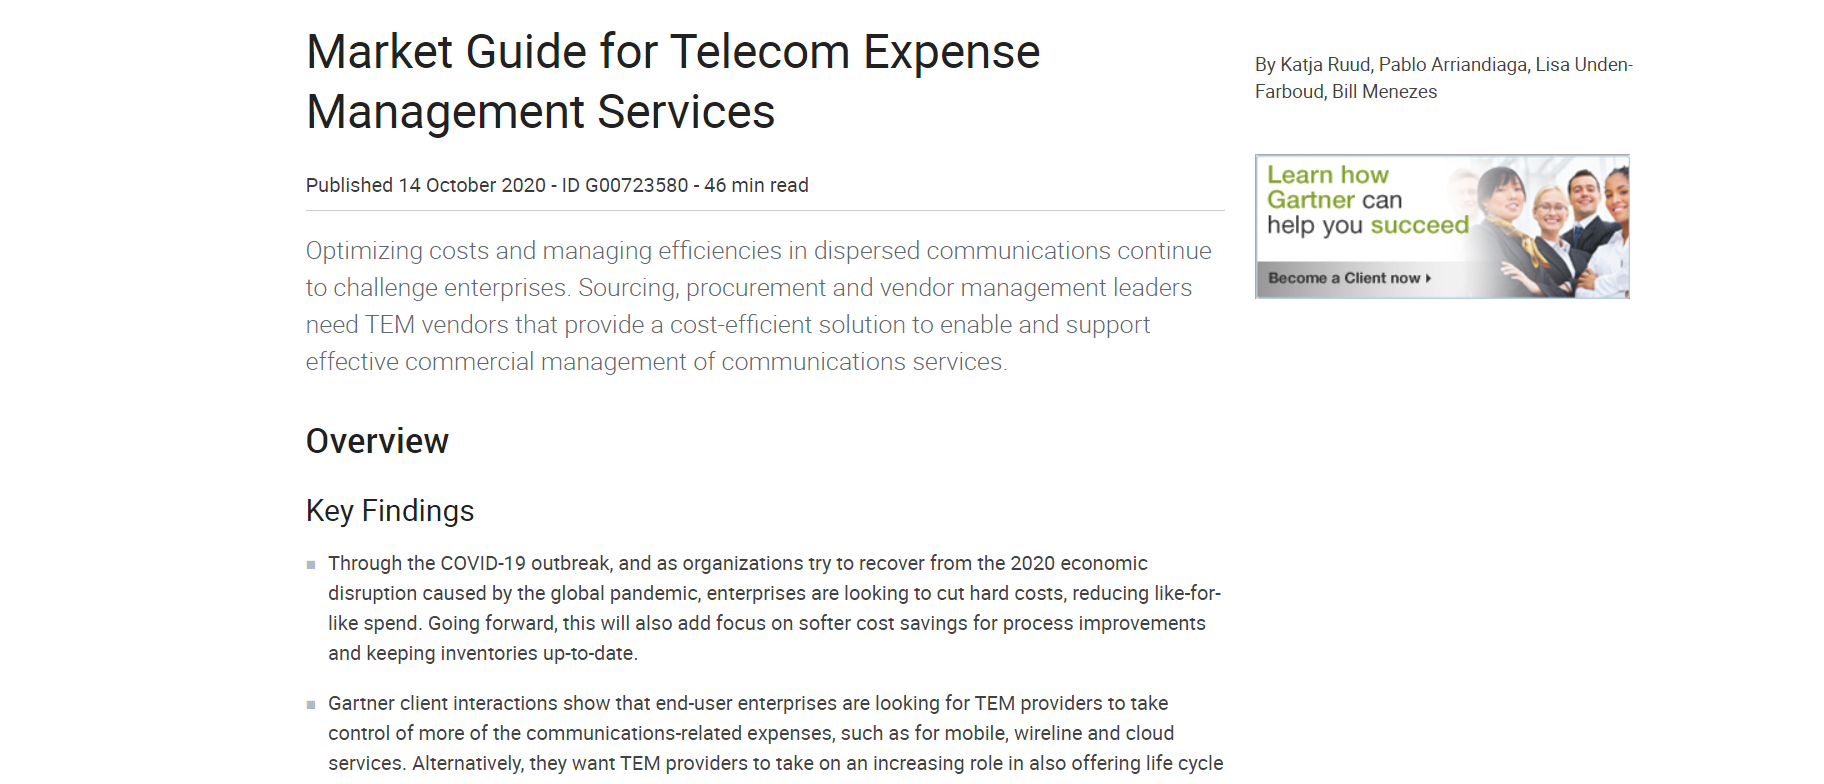  Gartner 2020 Market Guide for Telecom Expense Management Services